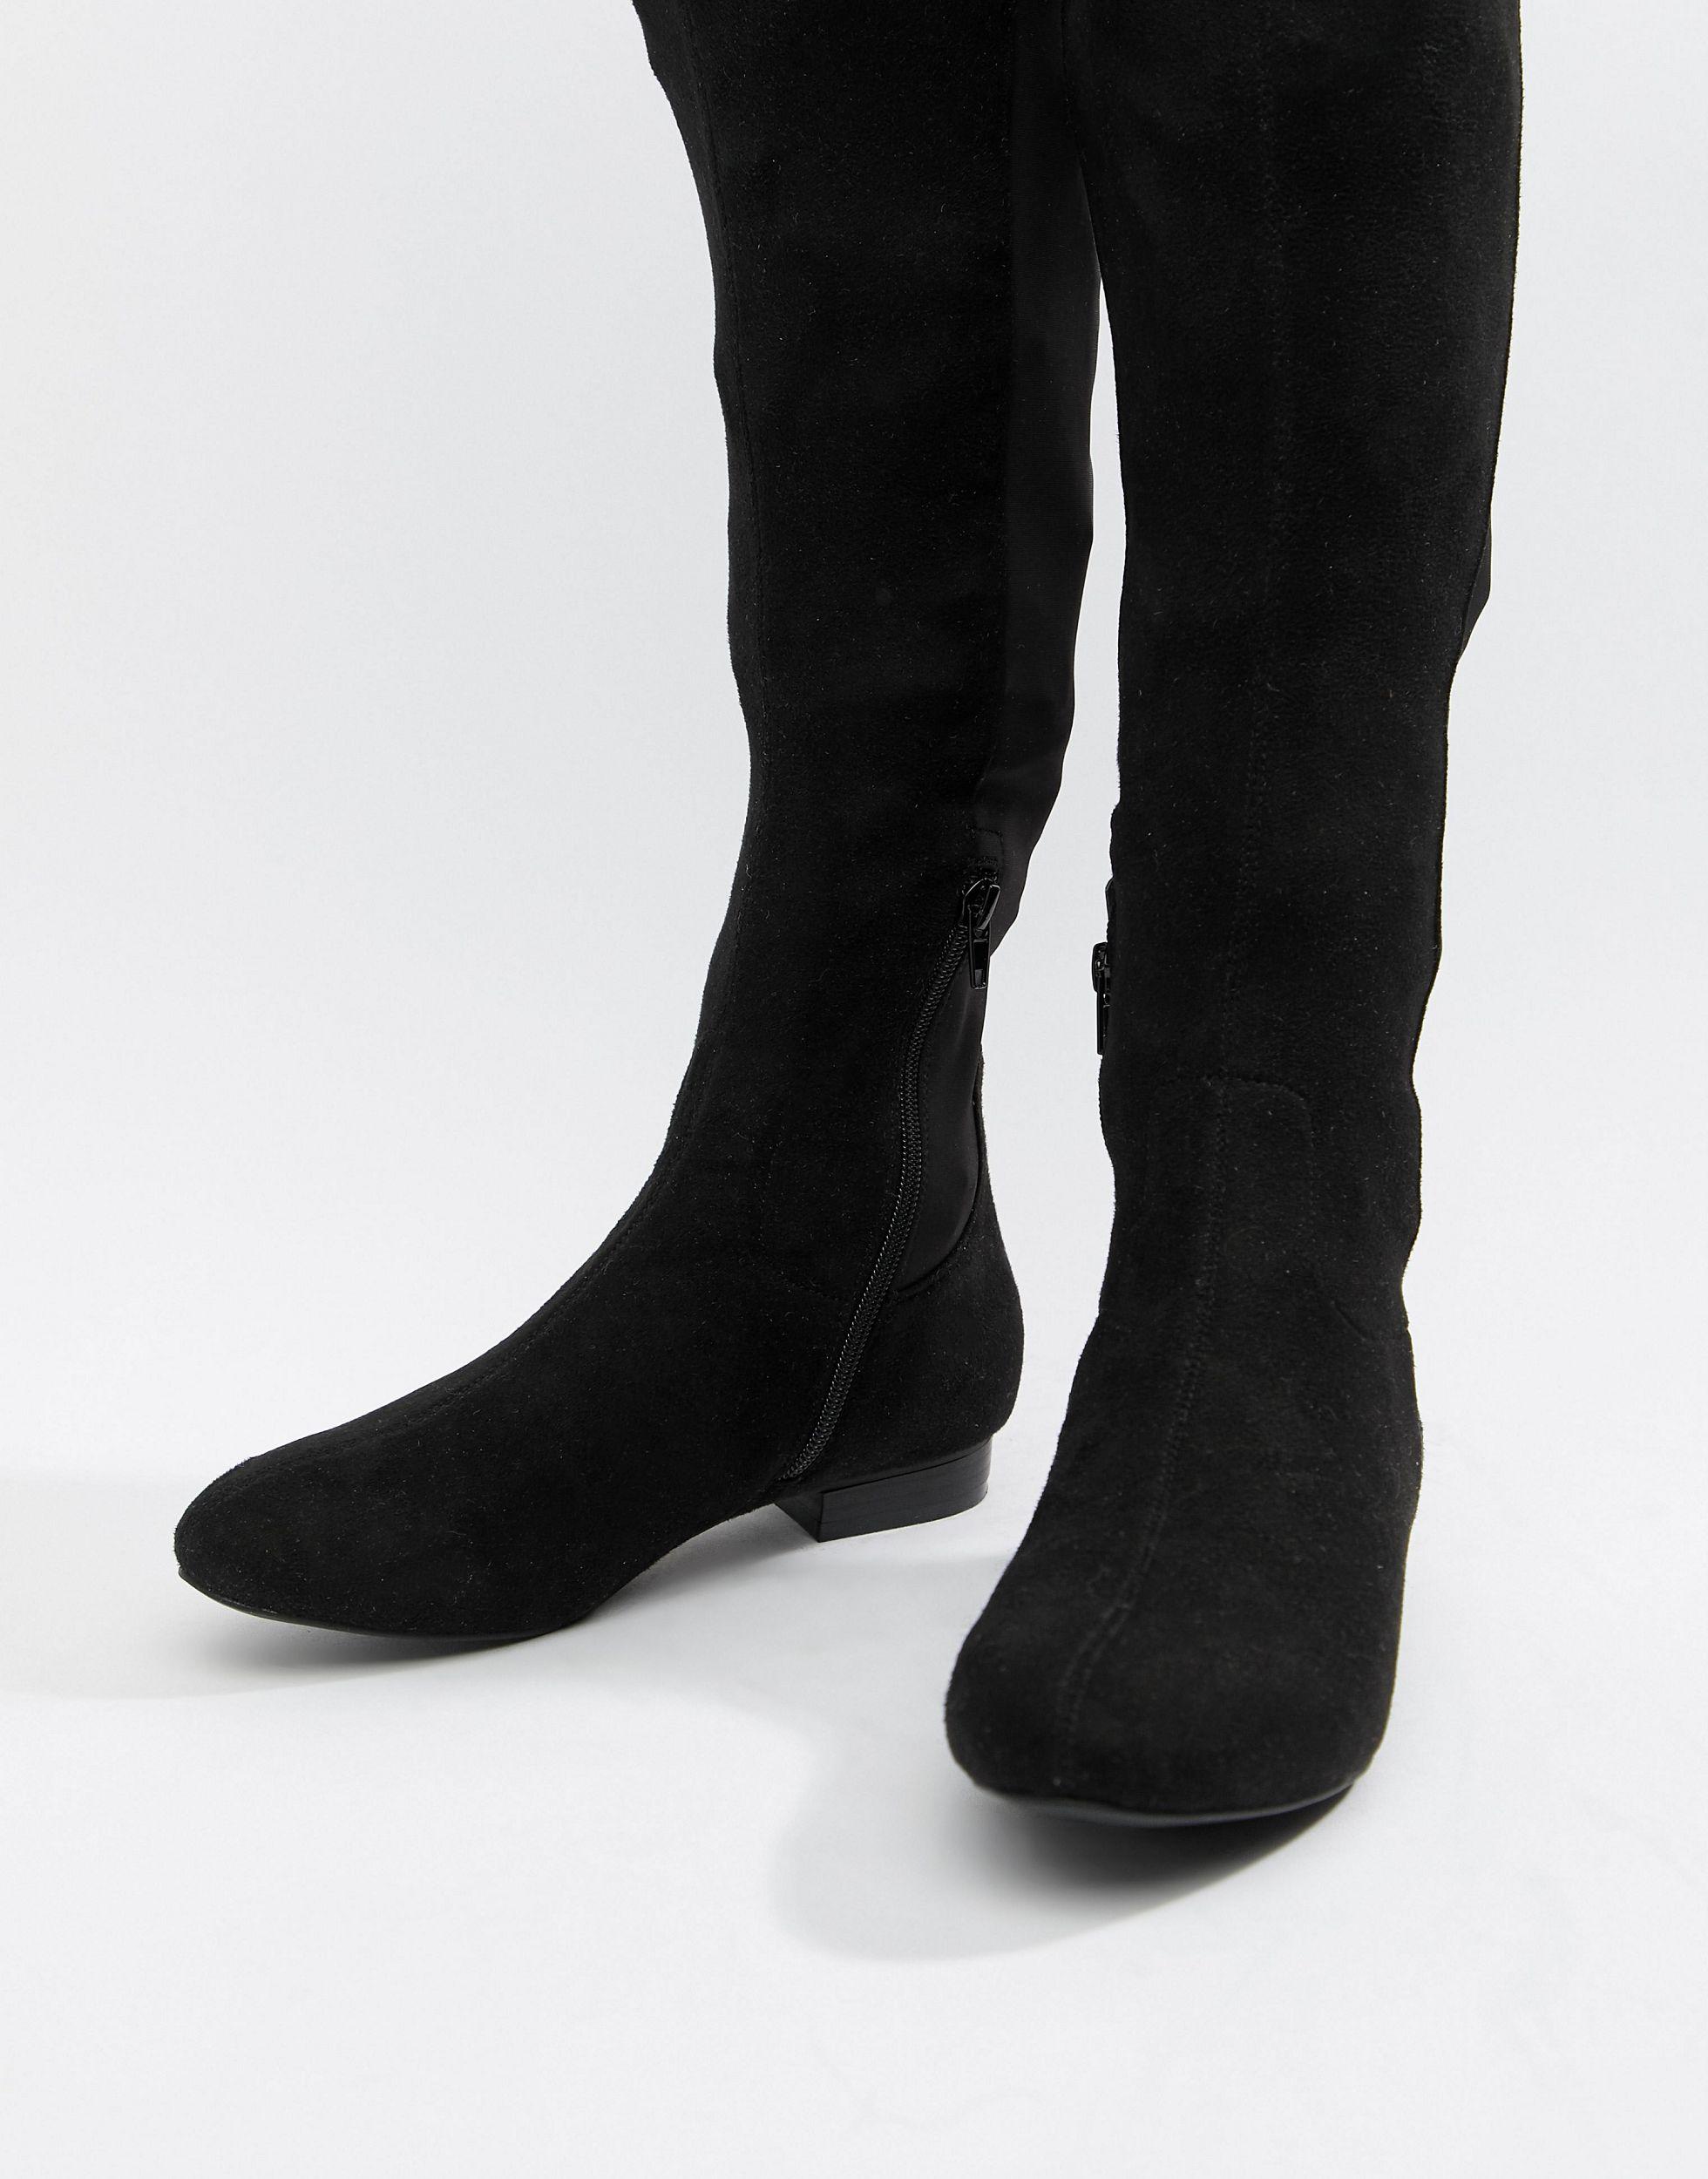 asos design kelby flat elastic thigh high boots